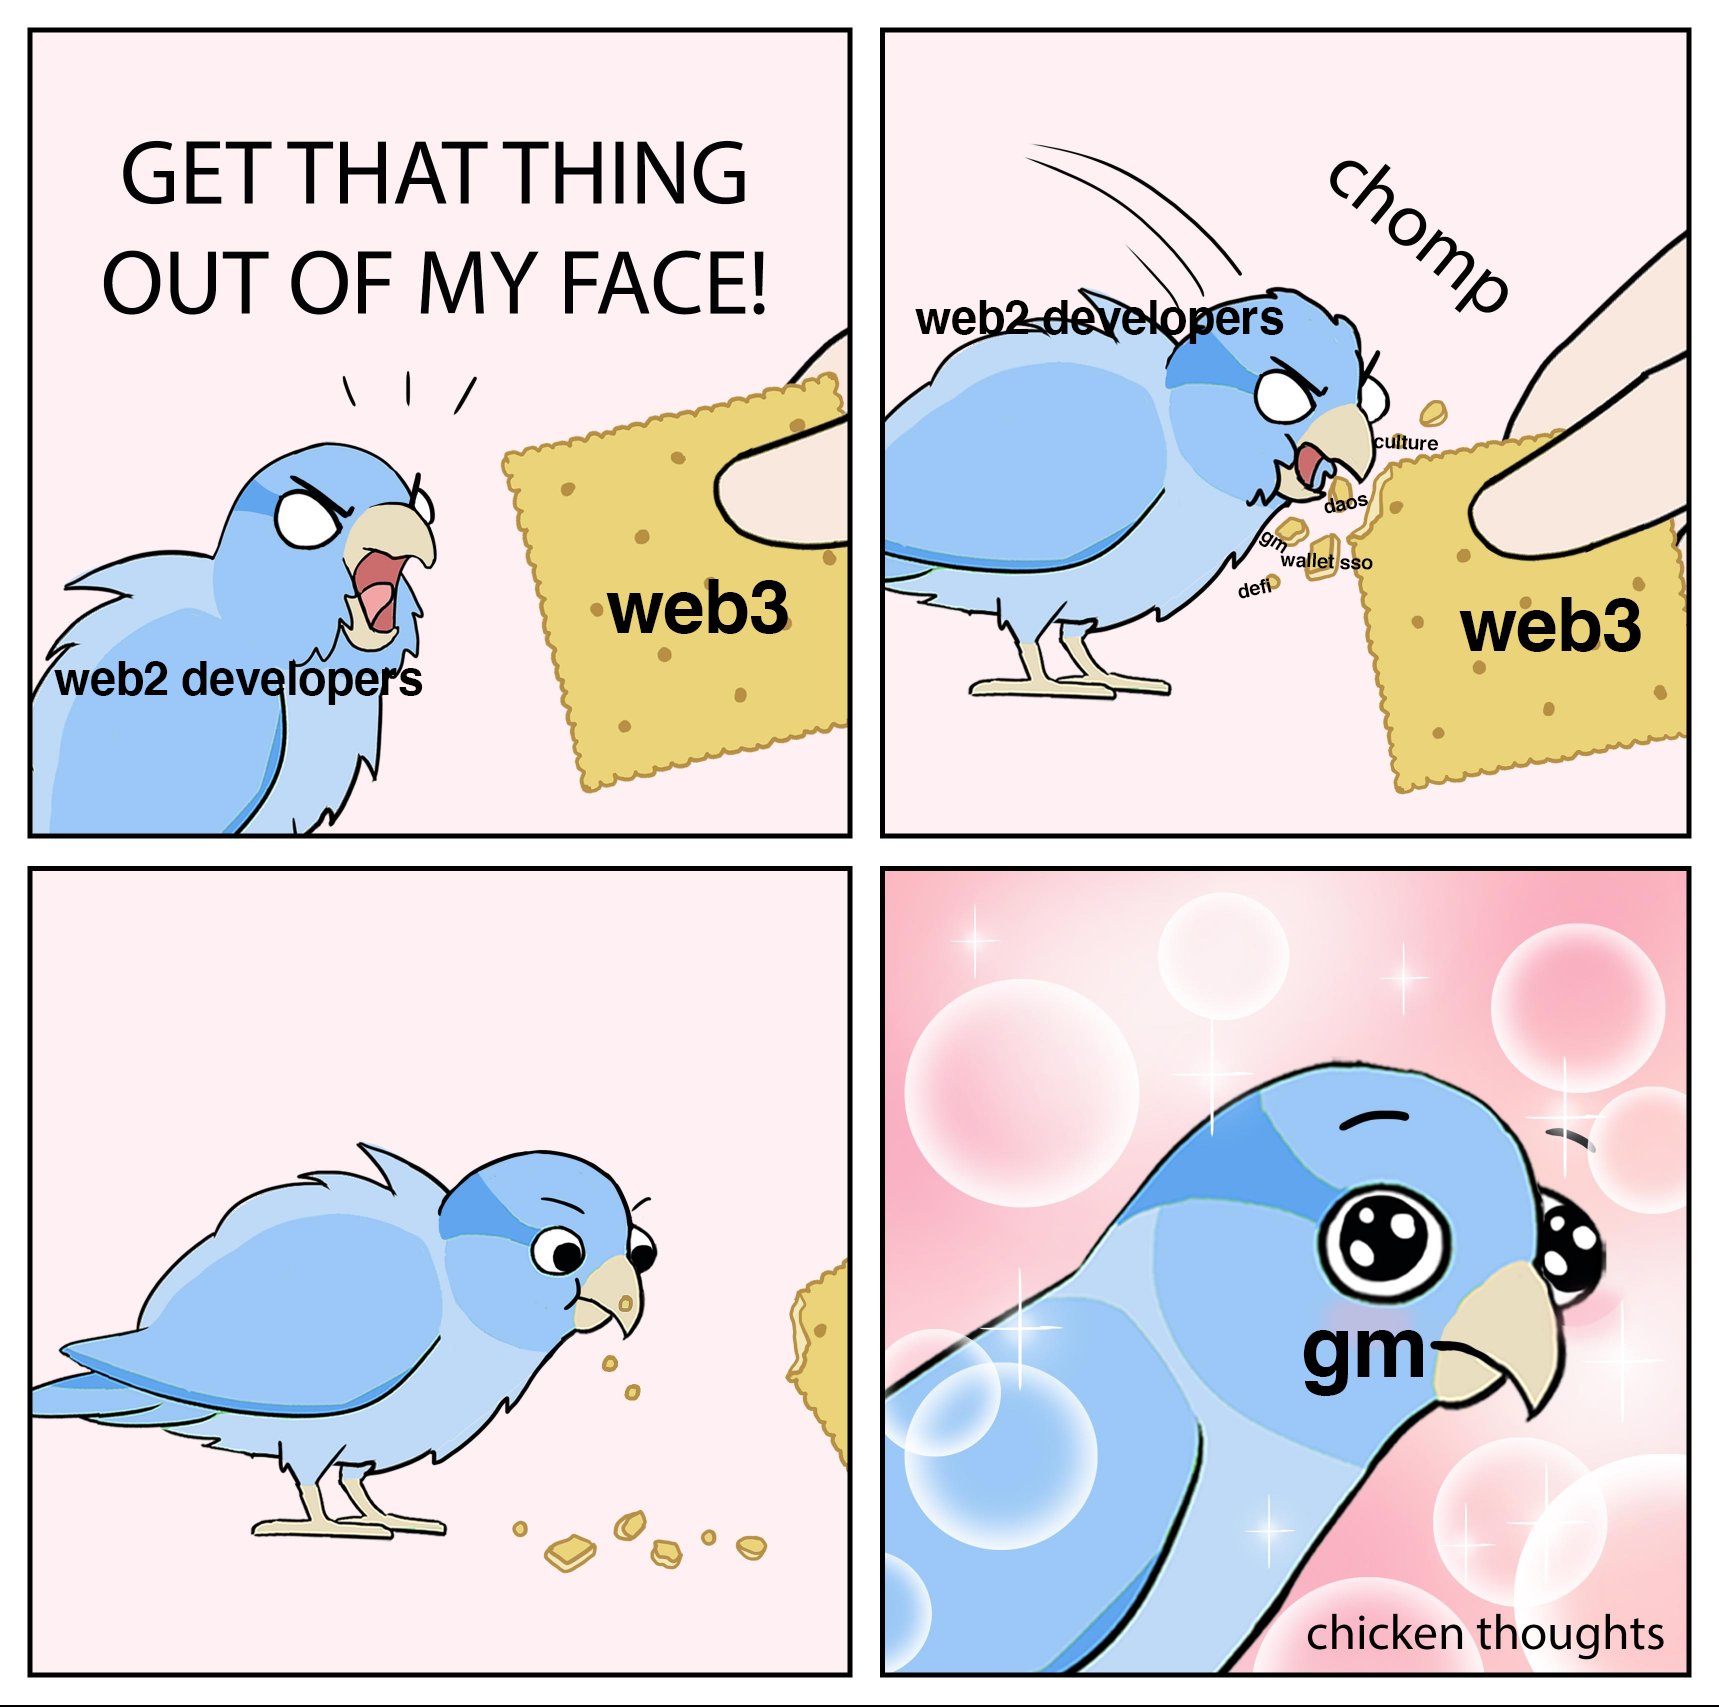 a meme about web3